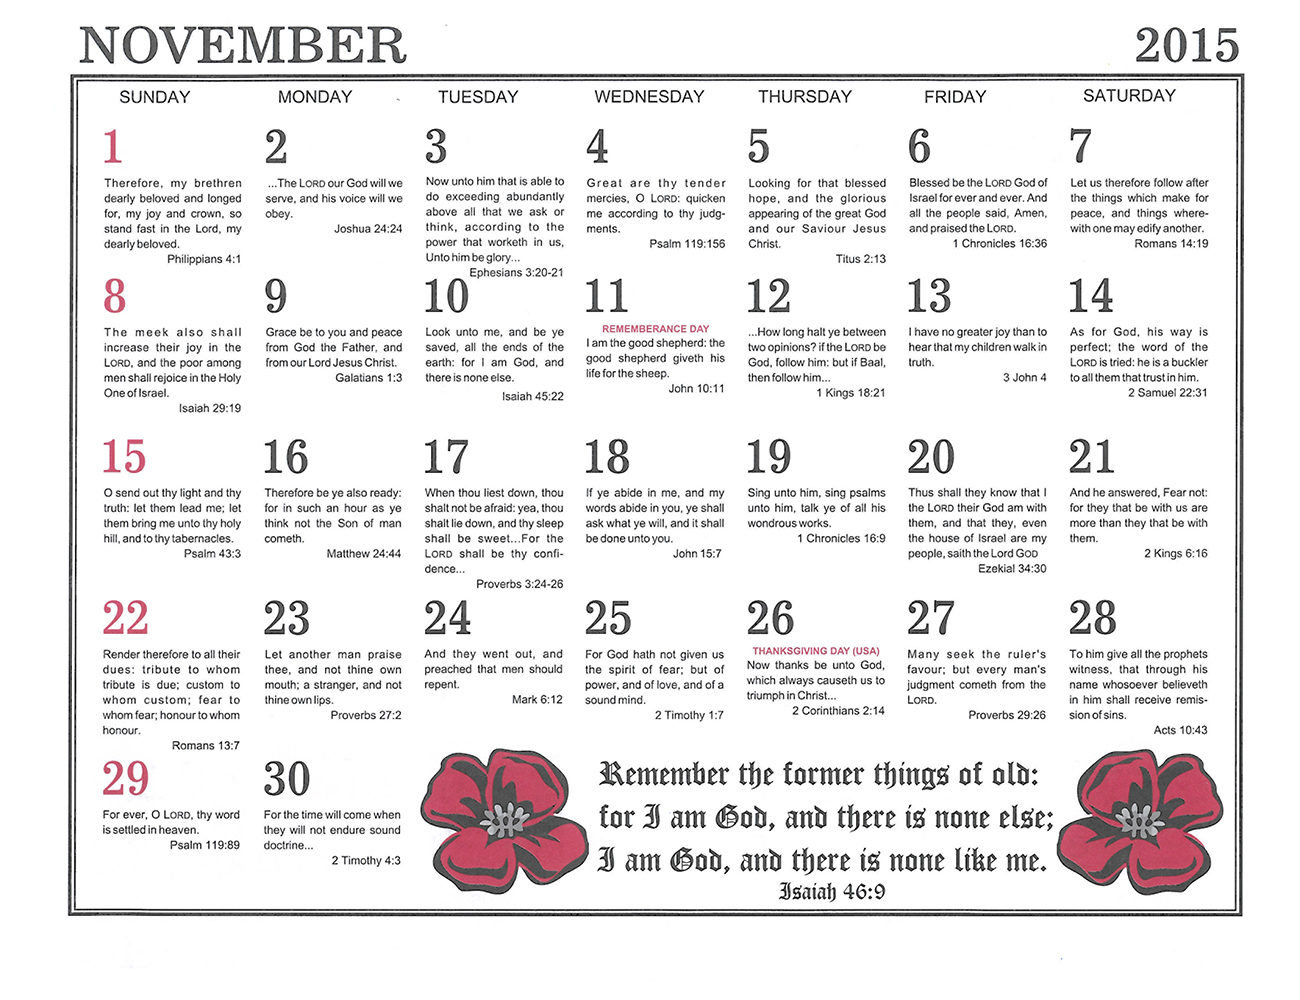 November: 2015 The Peoples Gospel Hour Calendar